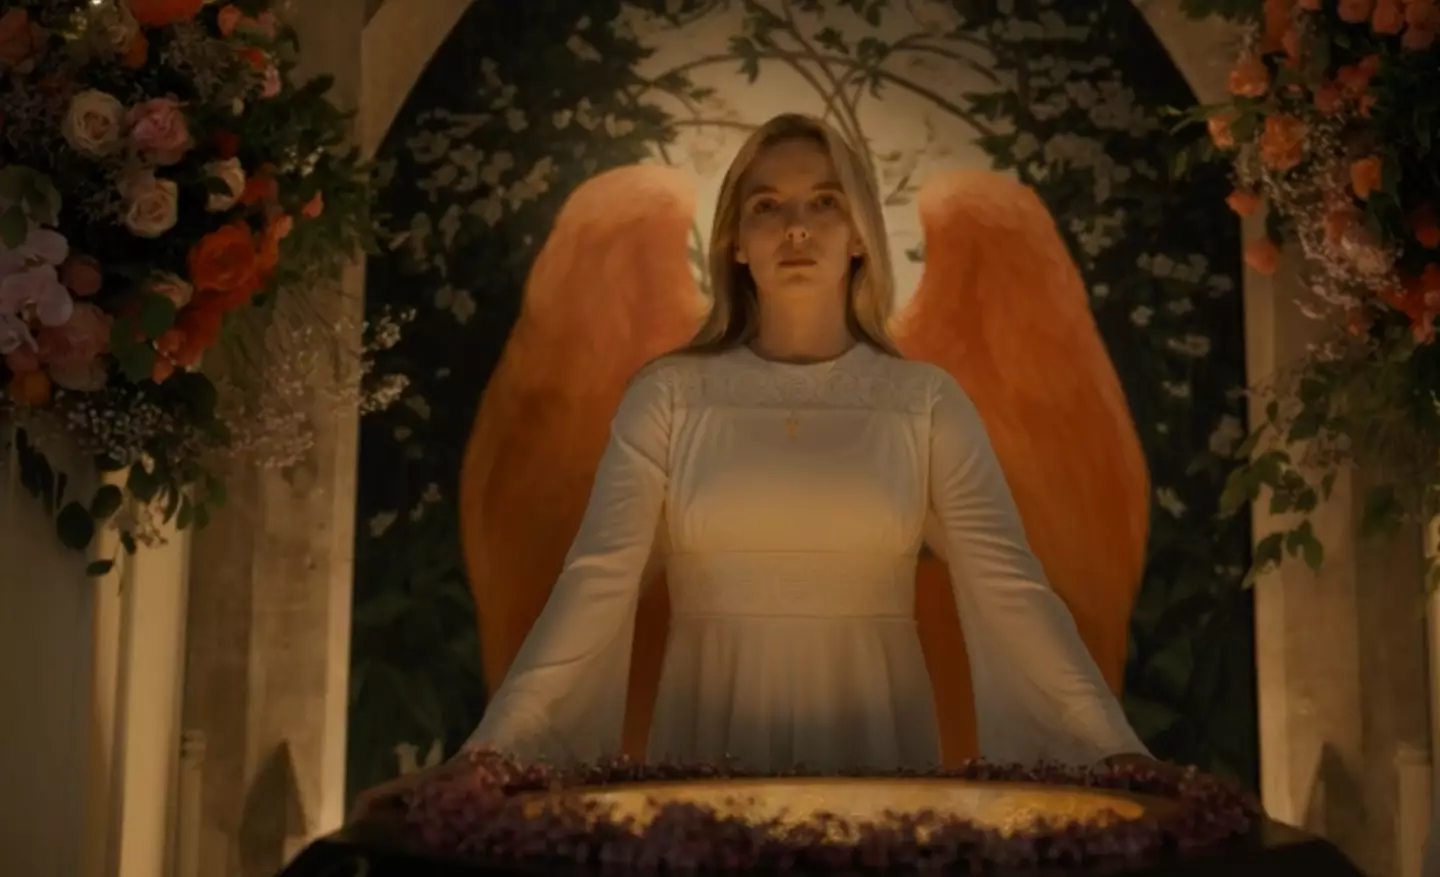 Villanelle also looks like Claire Danes' angel (